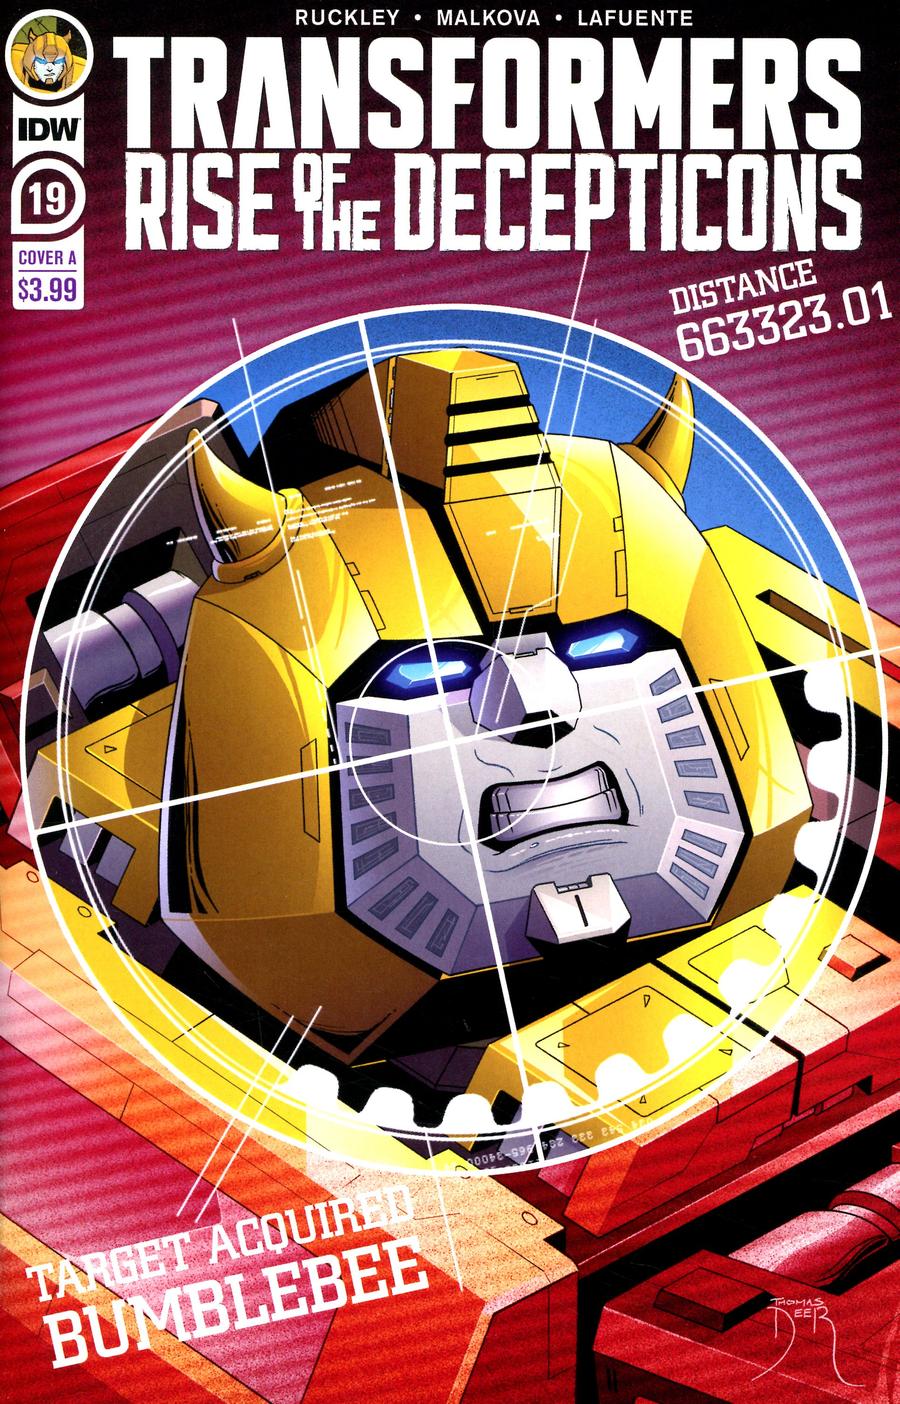 Transformers Vol 4 #19 Cover A Regular Thomas Deer Cover